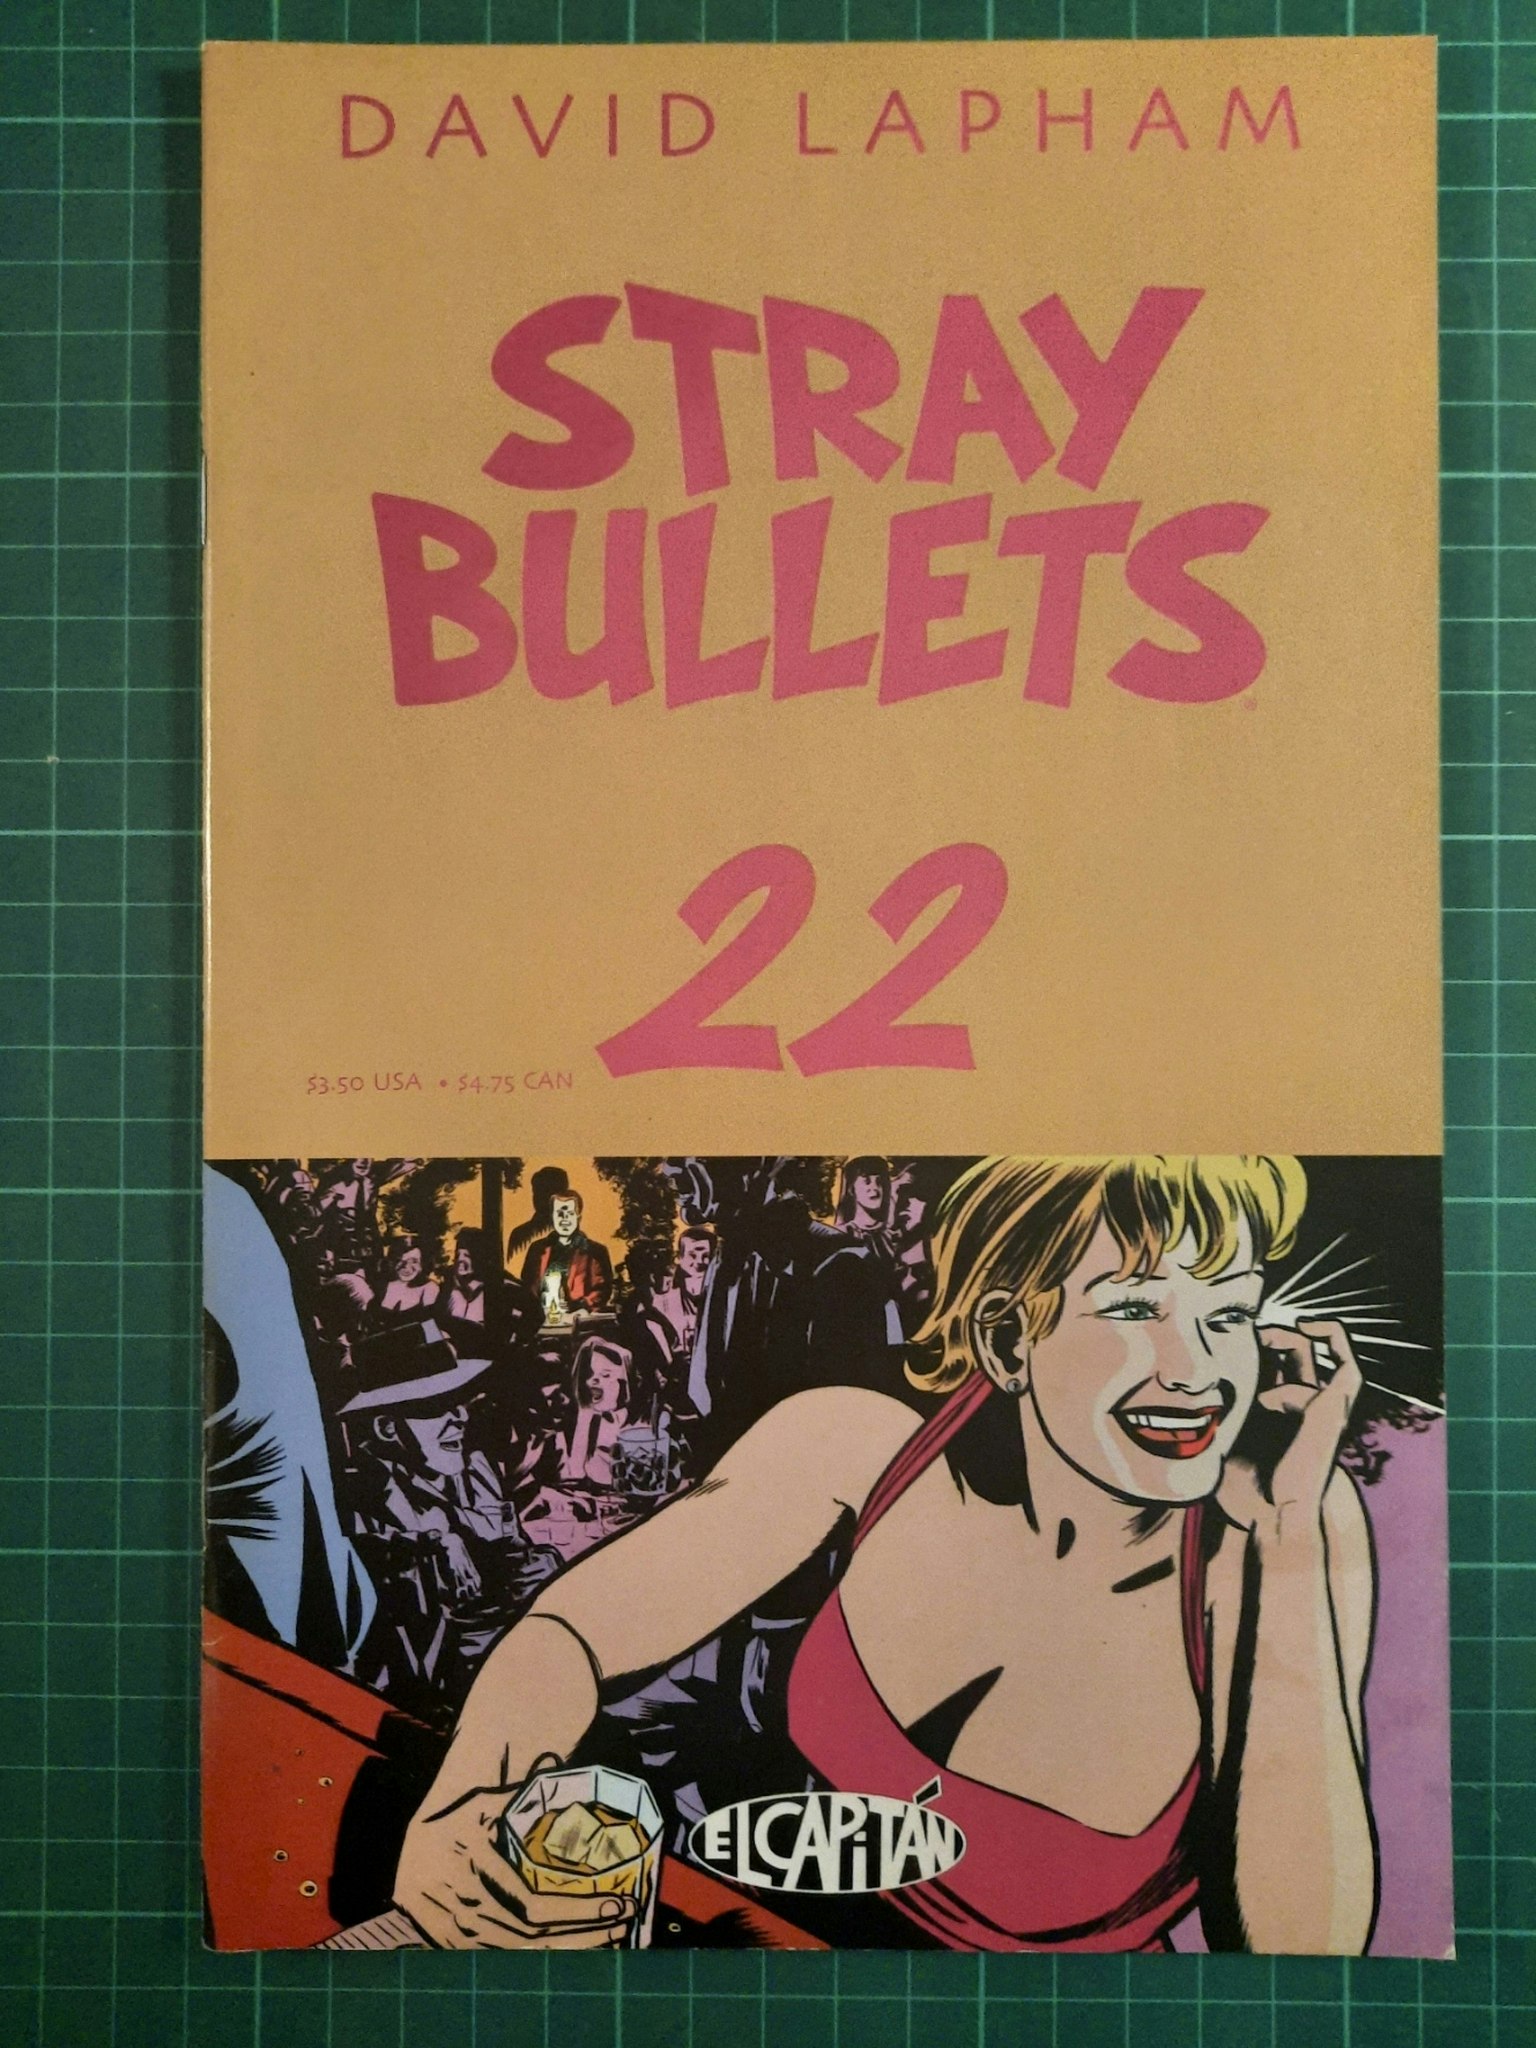 Stray bullets #22